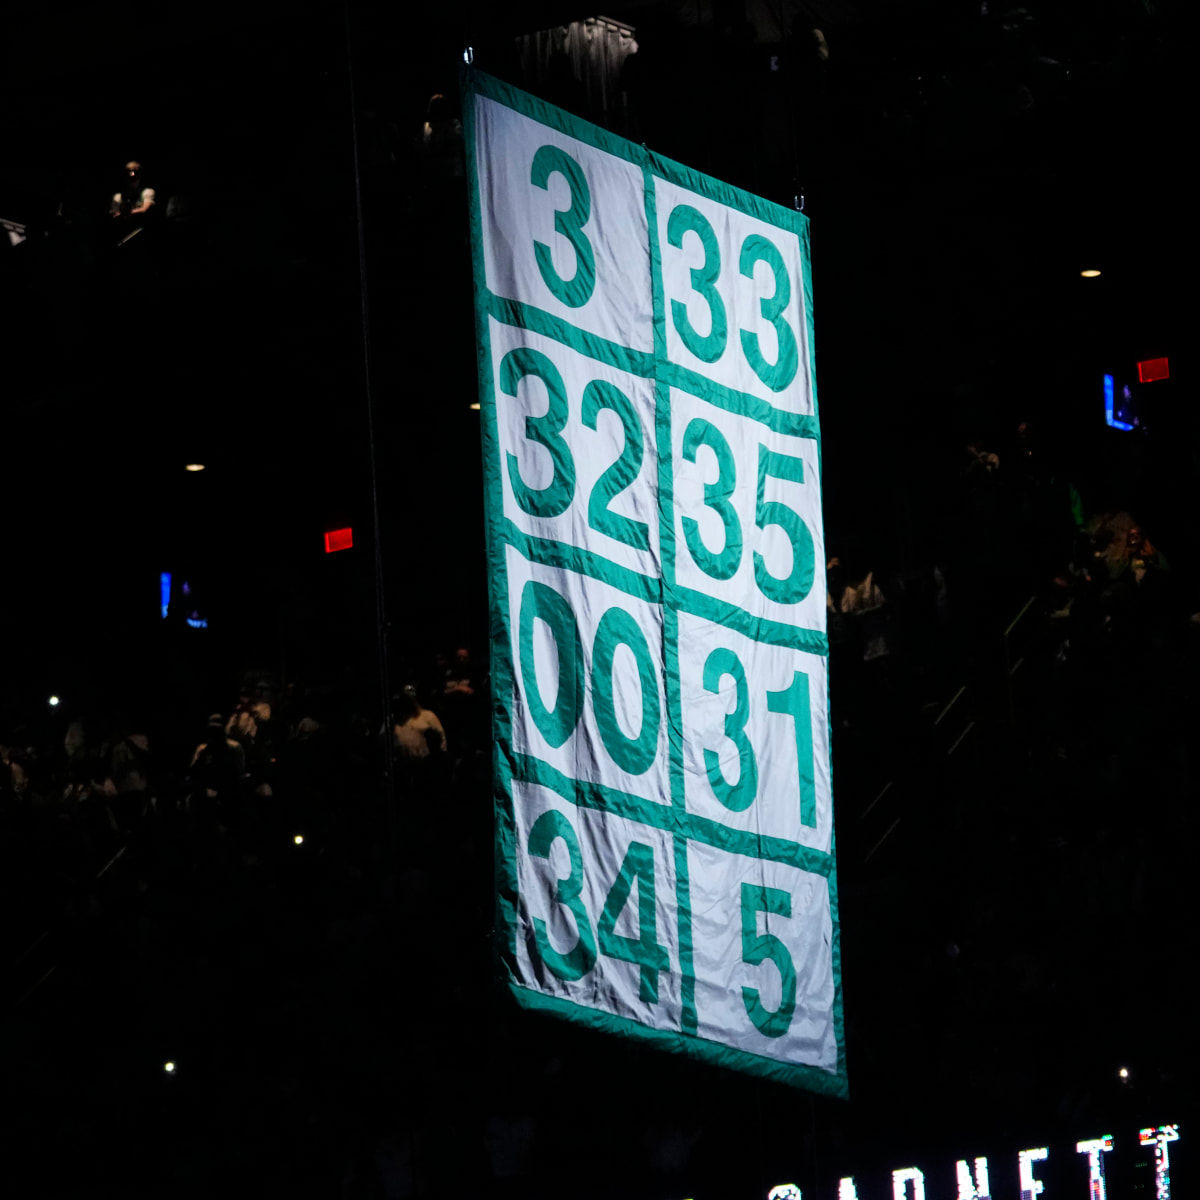 Kevin Garnett has No. 5 jersey retired by Celtics, buries hatchet